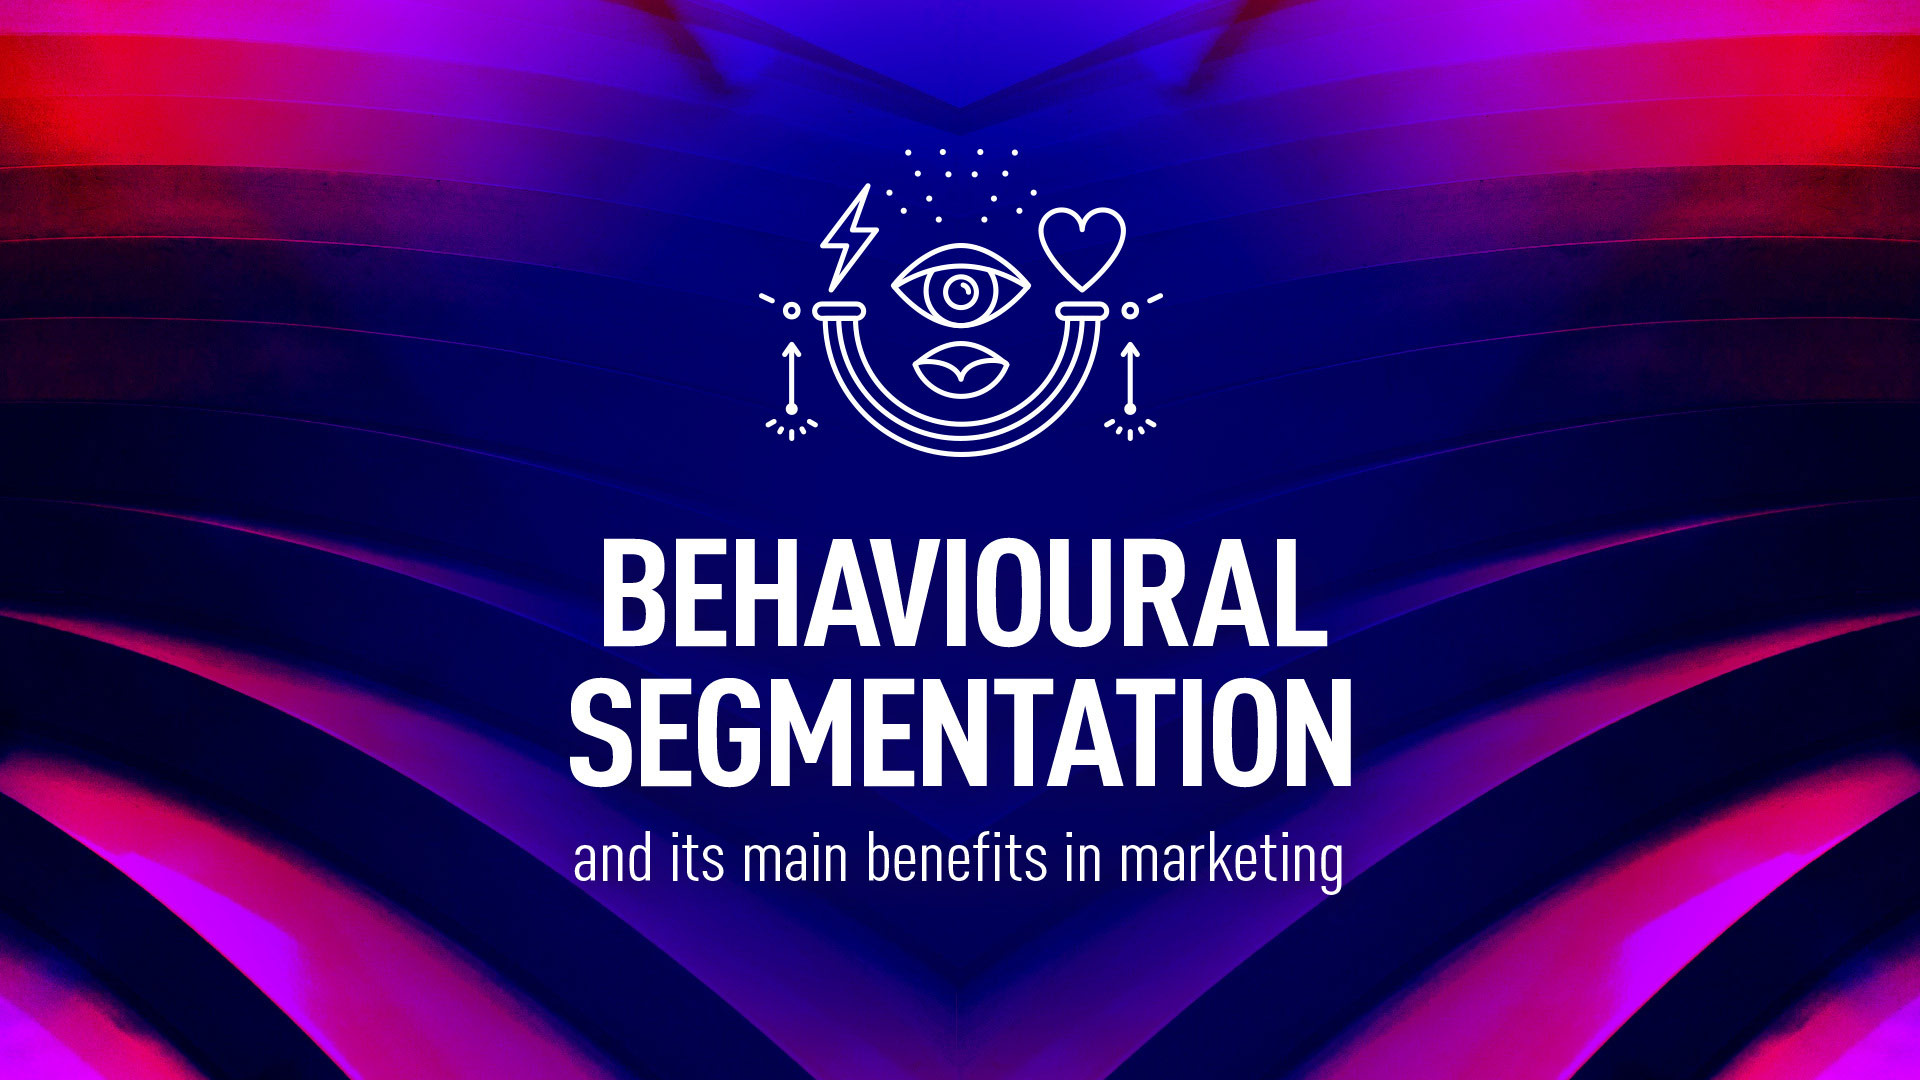 Behavioural segmentation in marketing benefits